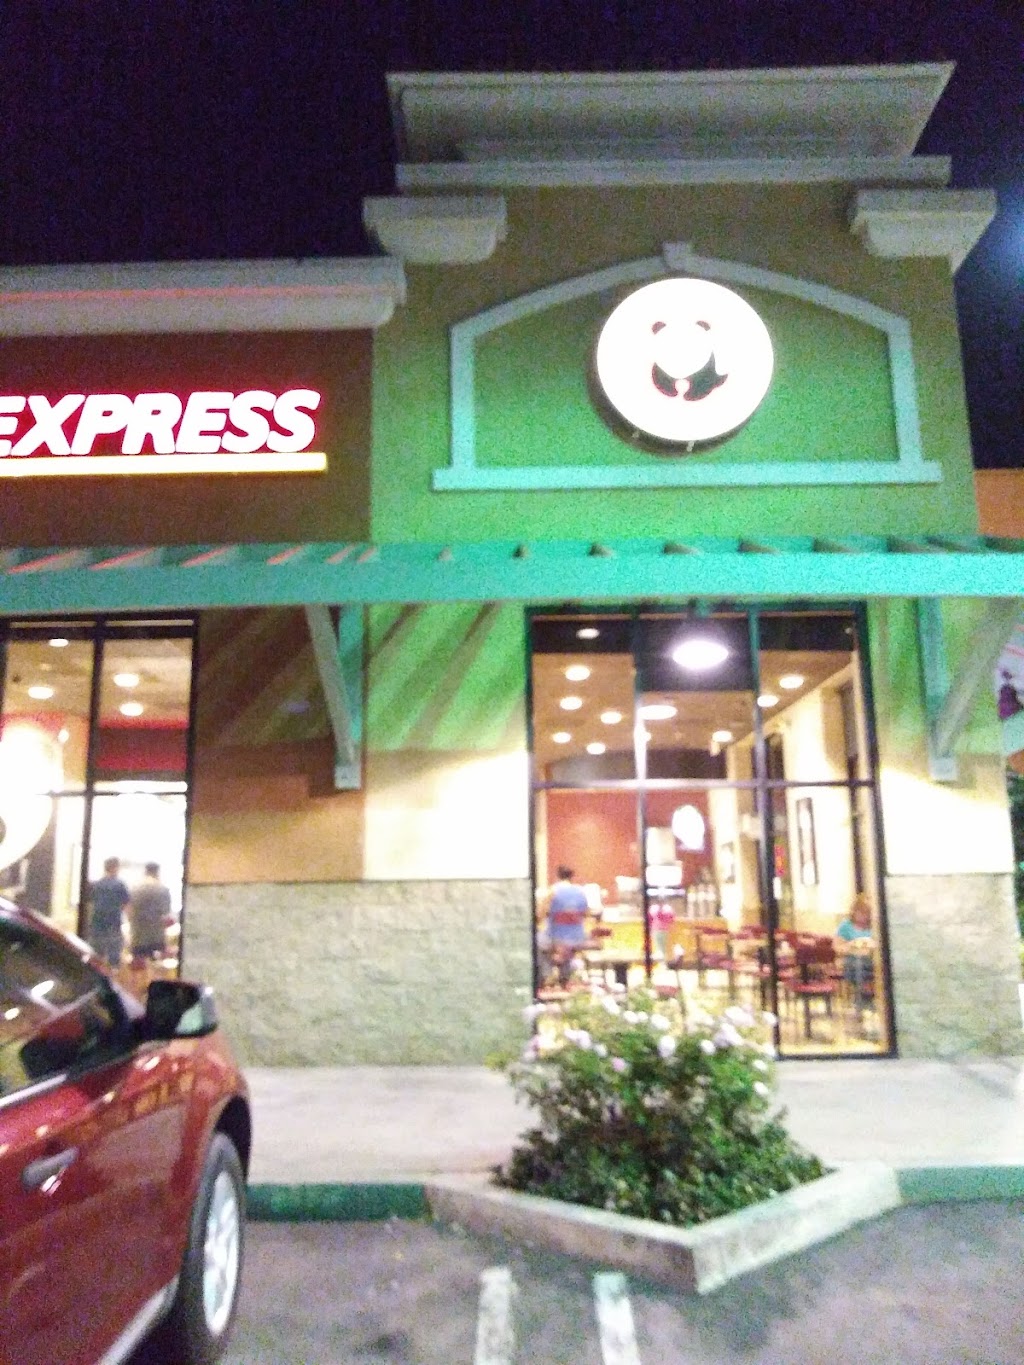 Panda Express | 23746 Newhall Ave, Santa Clarita, CA 91321, USA | Phone: (661) 288-1060